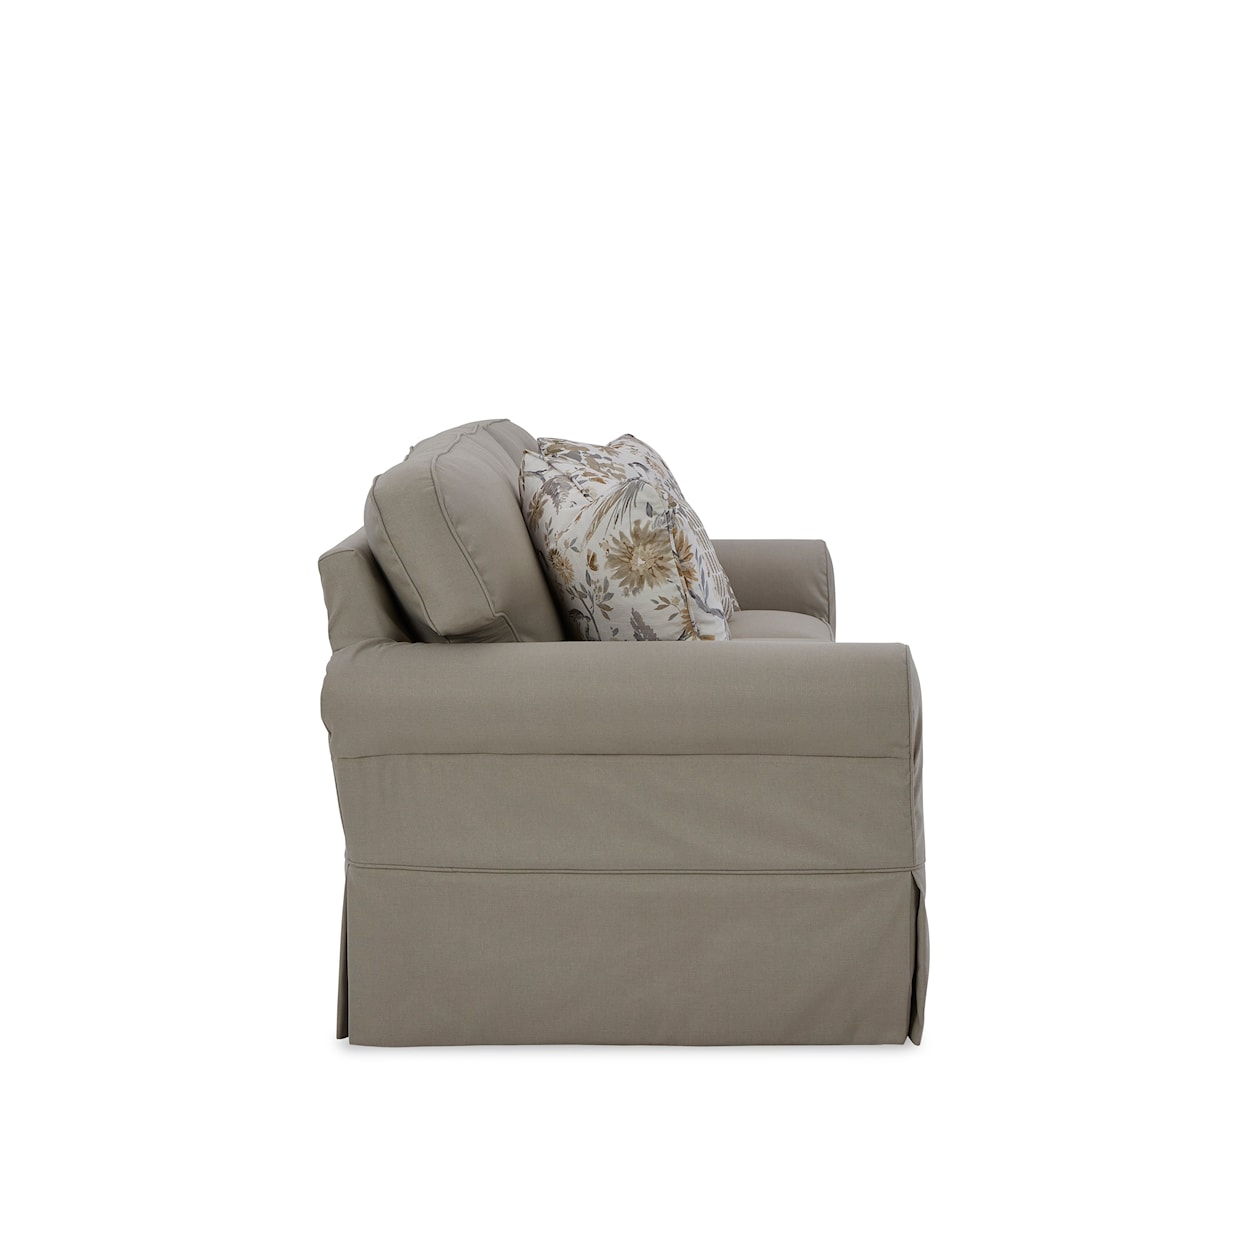 Craftmaster 917450BD 3-Cushion Sofa